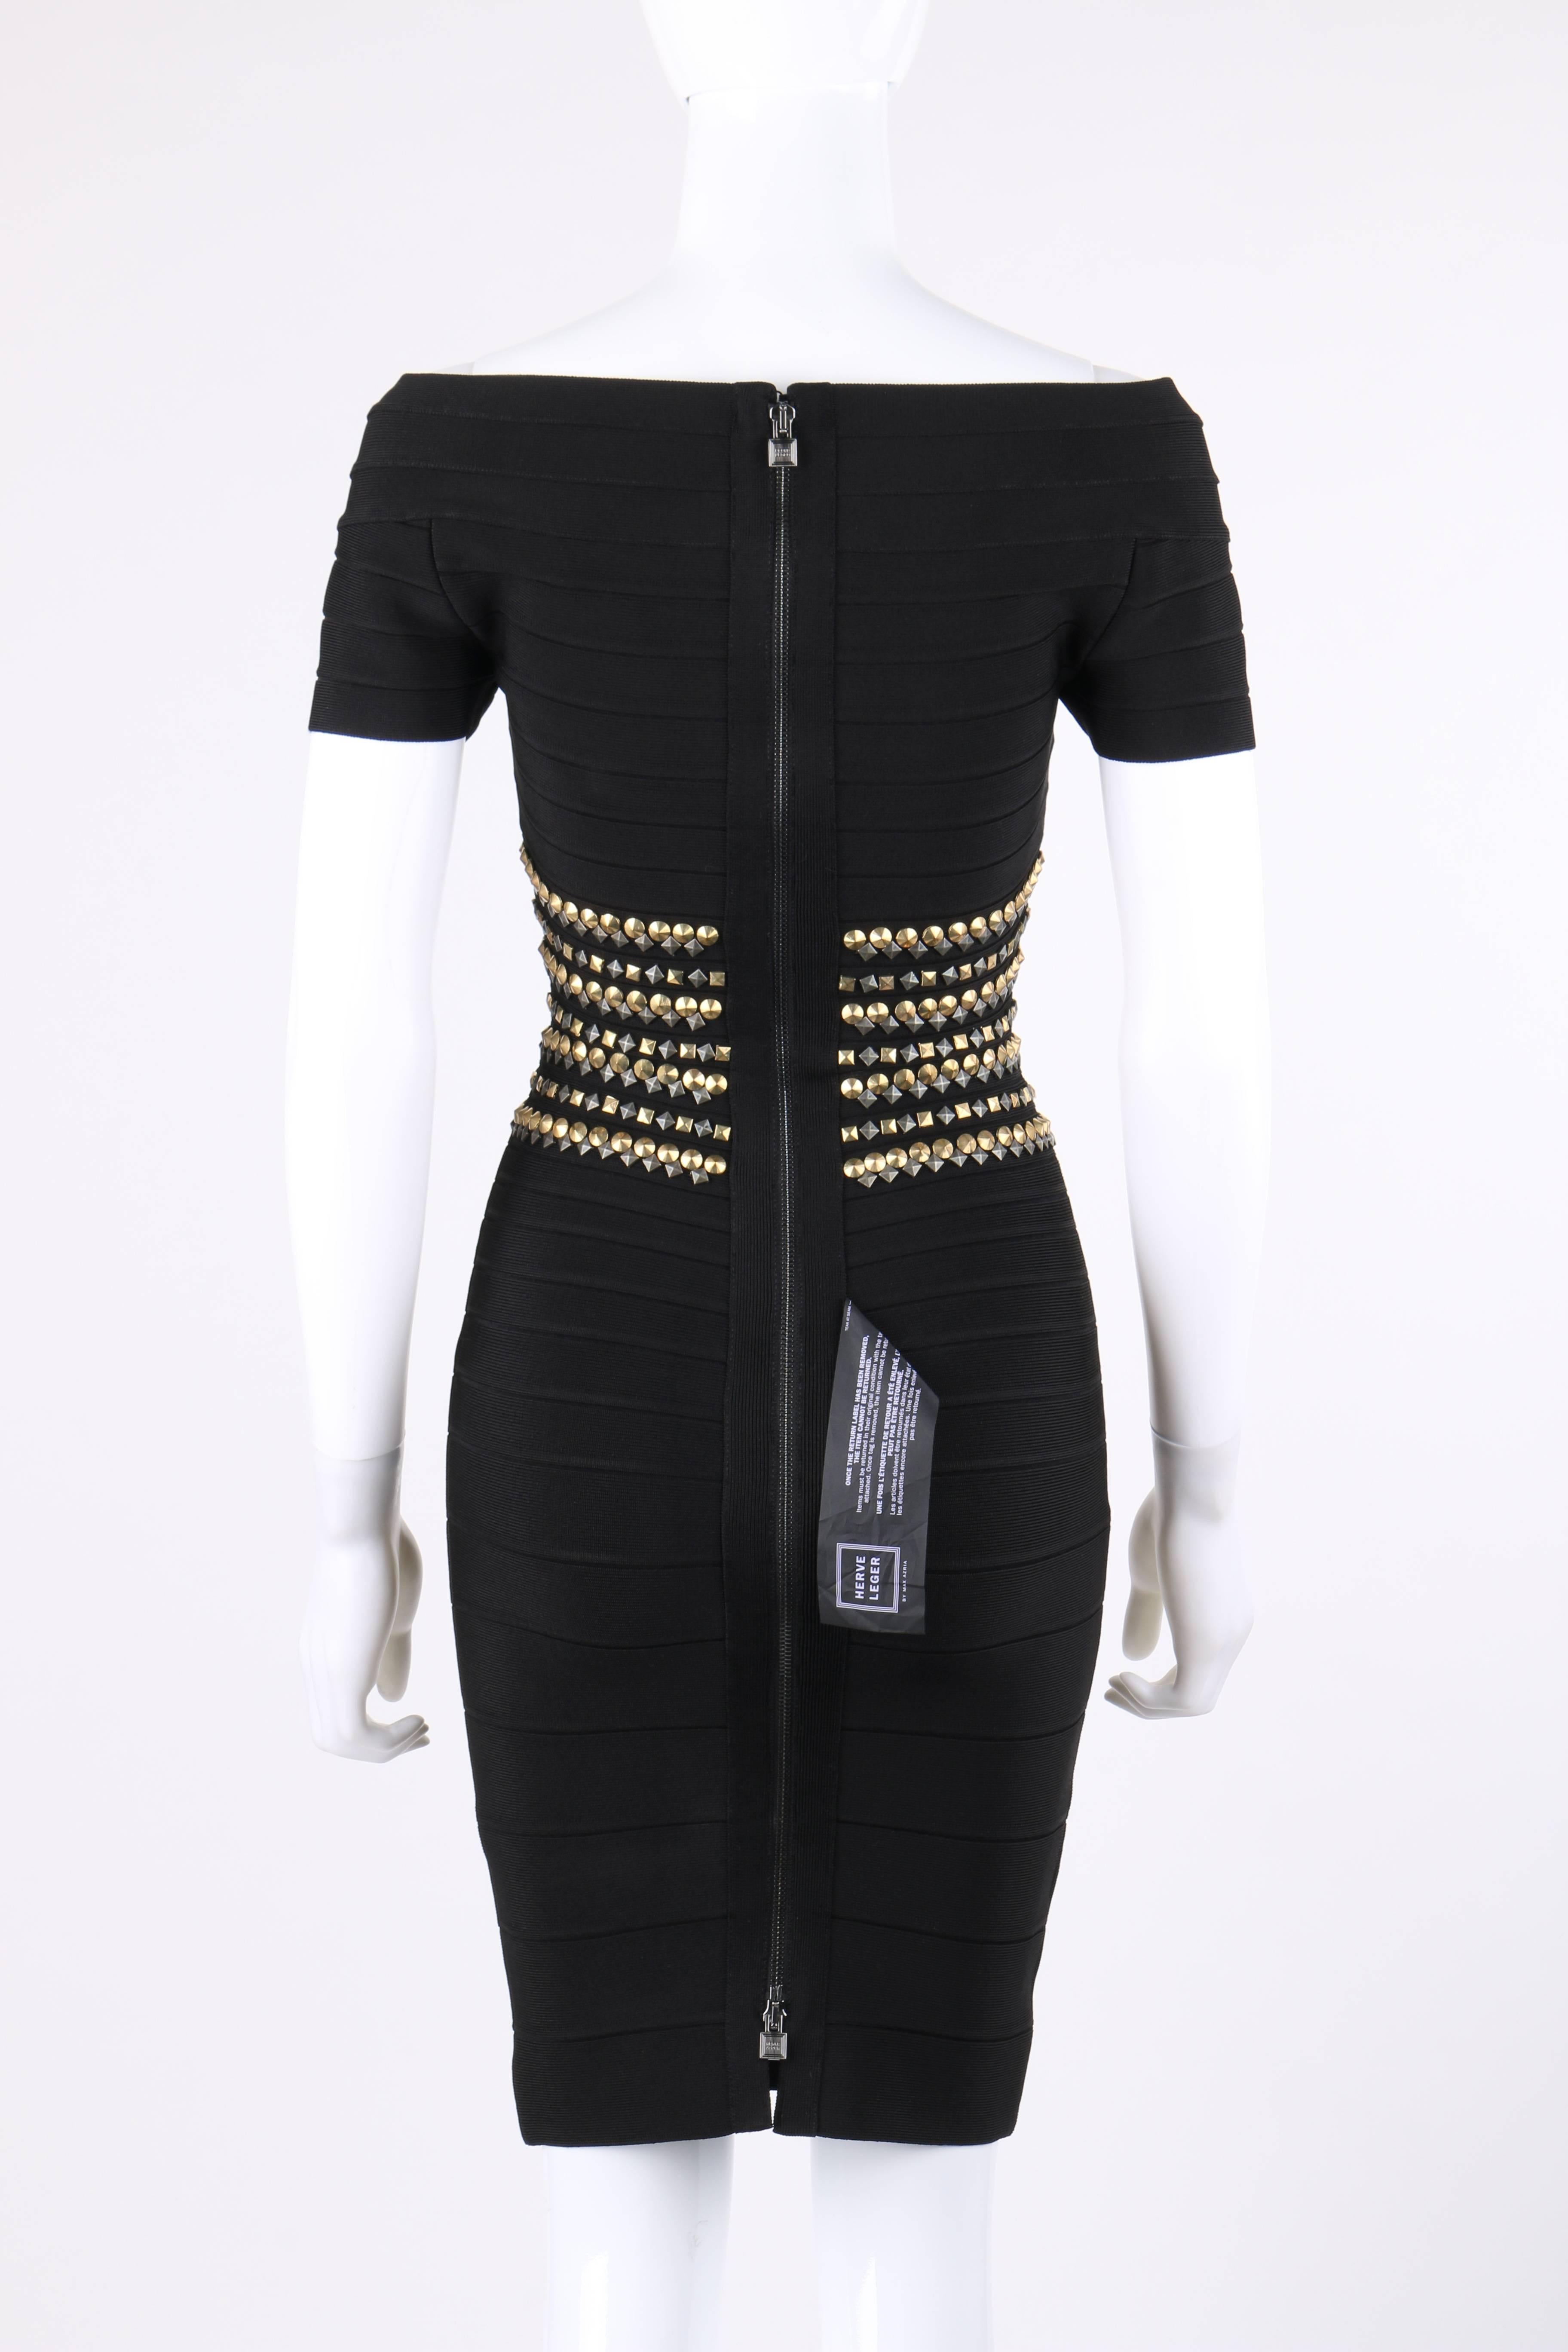 HERVE LEGER c2014 "Carmen" Black Bandage Knit Studded Bodycon Cocktail Dress  NWT For Sale at 1stDibs